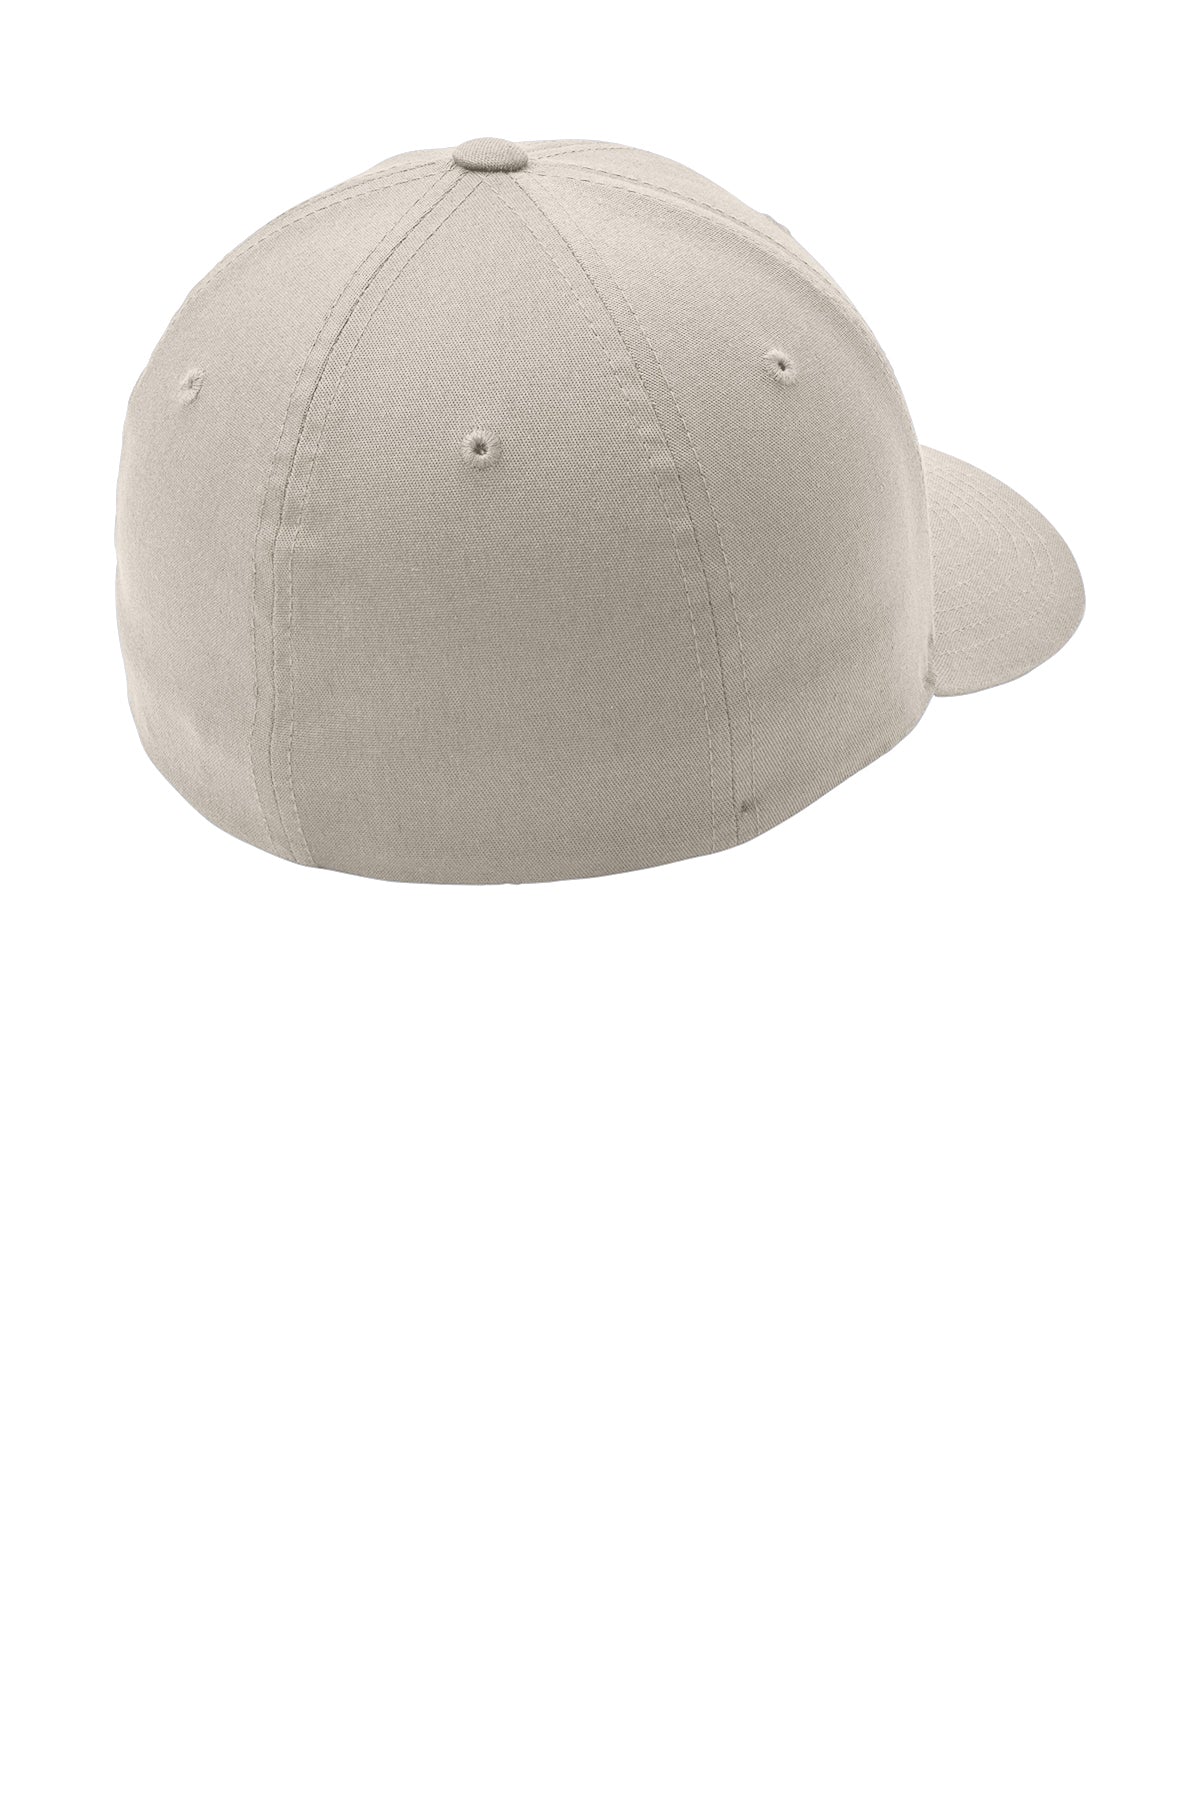 Port Authority Flexfit Cotton Twill Customized Caps, Stone